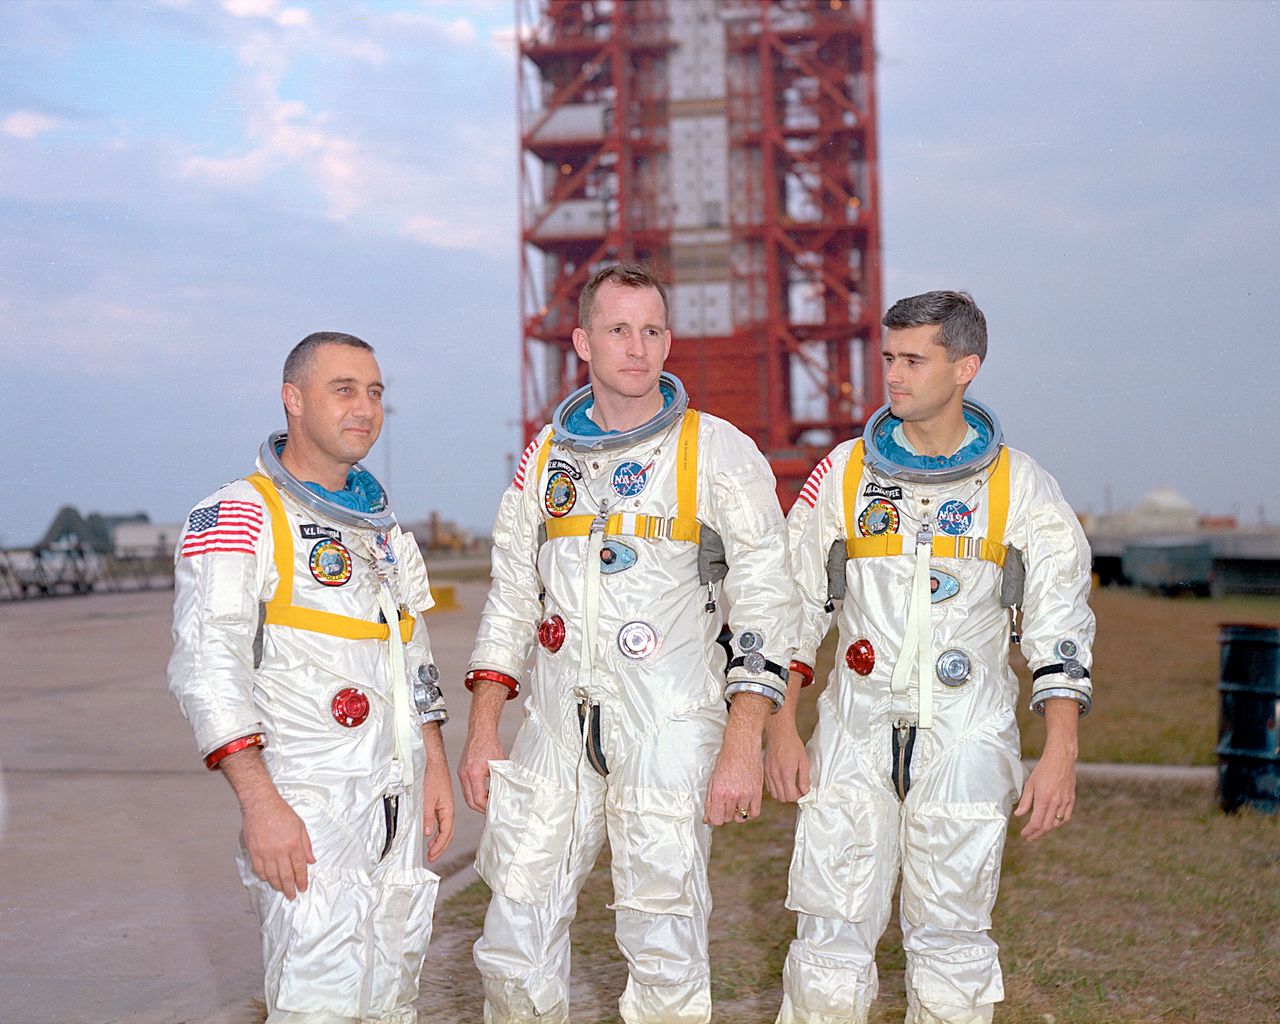 Od lewej: astronauci Gus Grissom, Ed White i Roger Chaffee